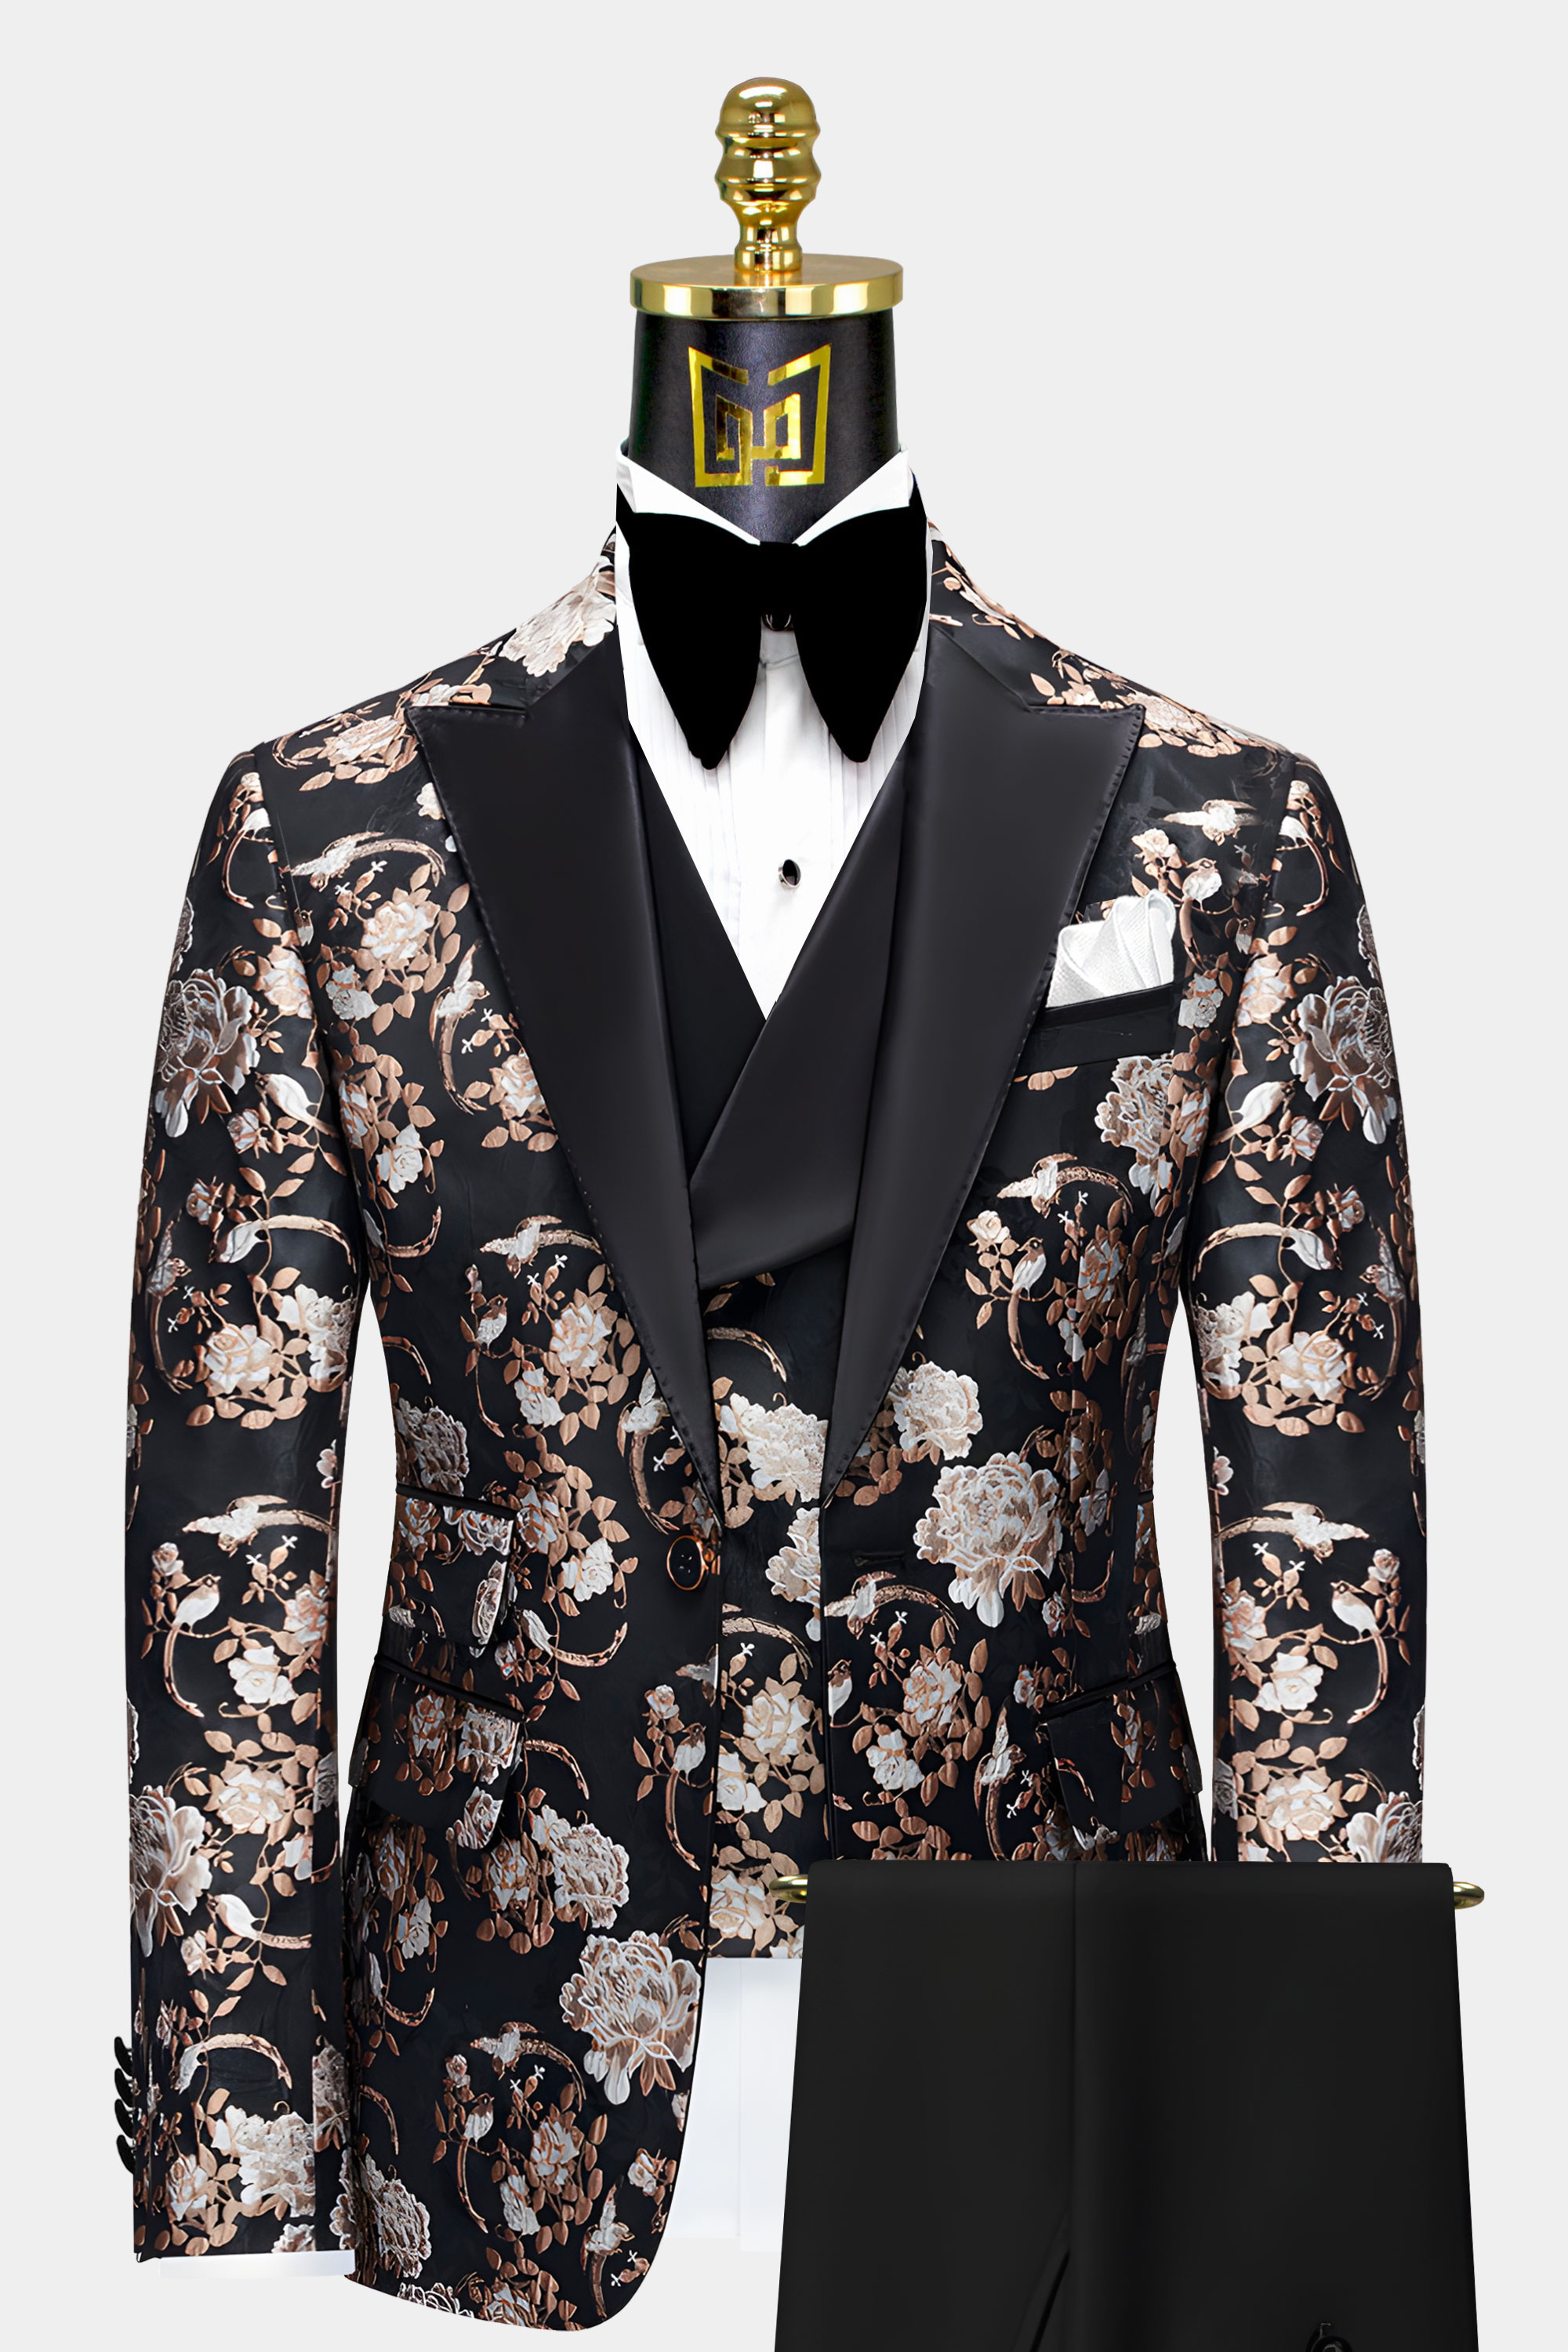 Black-Pant-Rose-Tuxedo-Prom-Wedding-Groom-Suit-from-Gentlemansguru.com